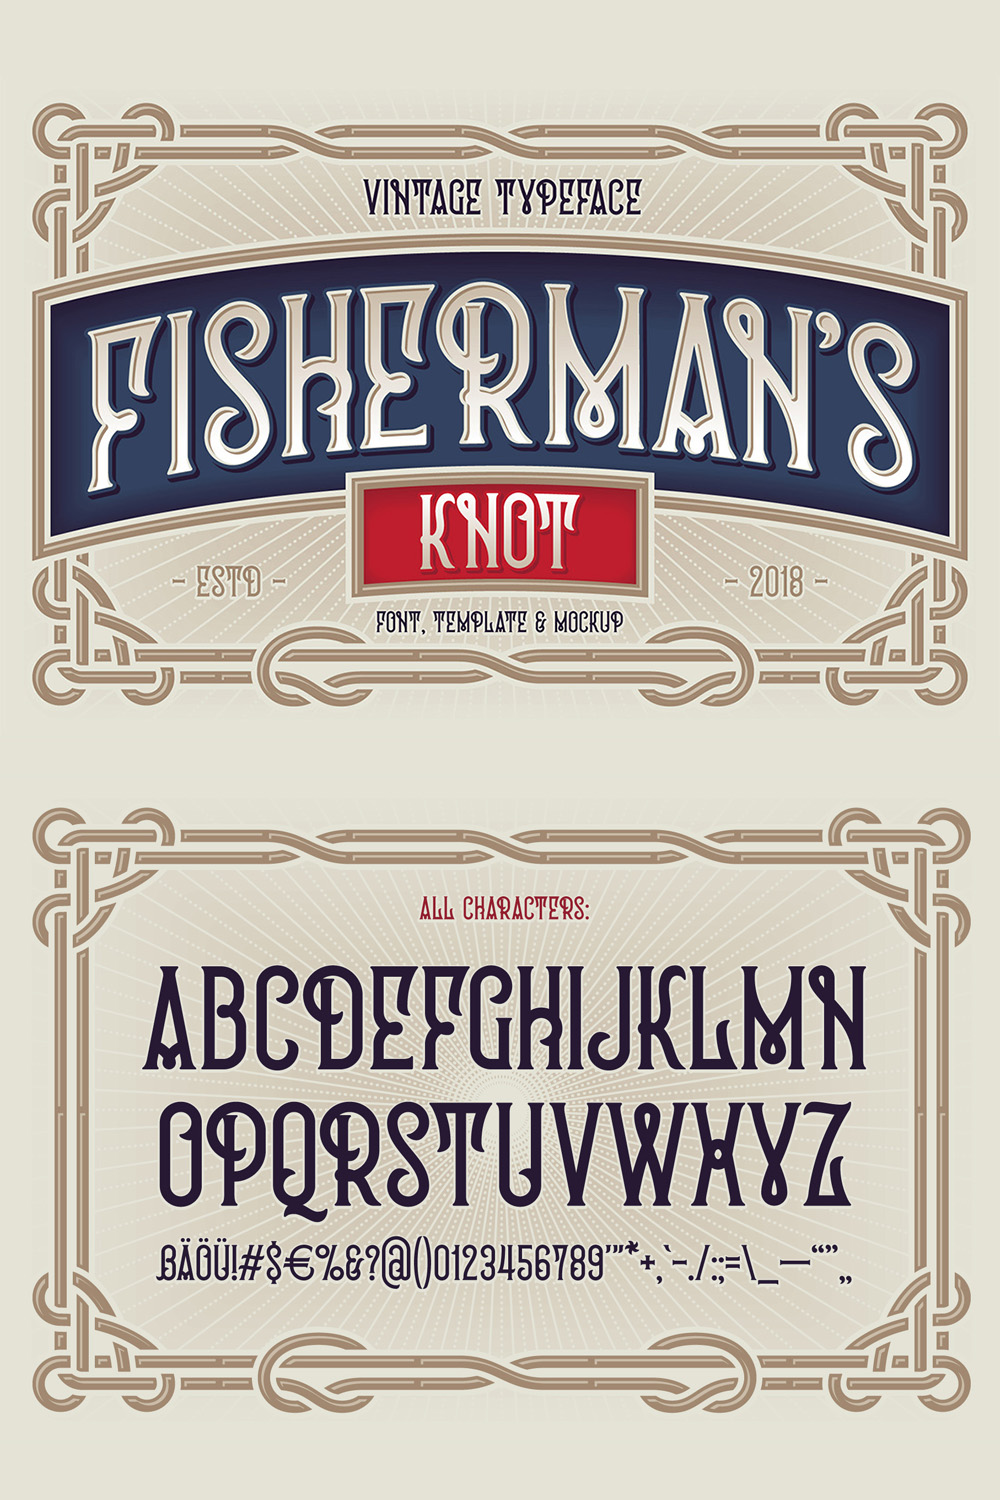 Fisherman's Knot Font Graphics pinterest image.